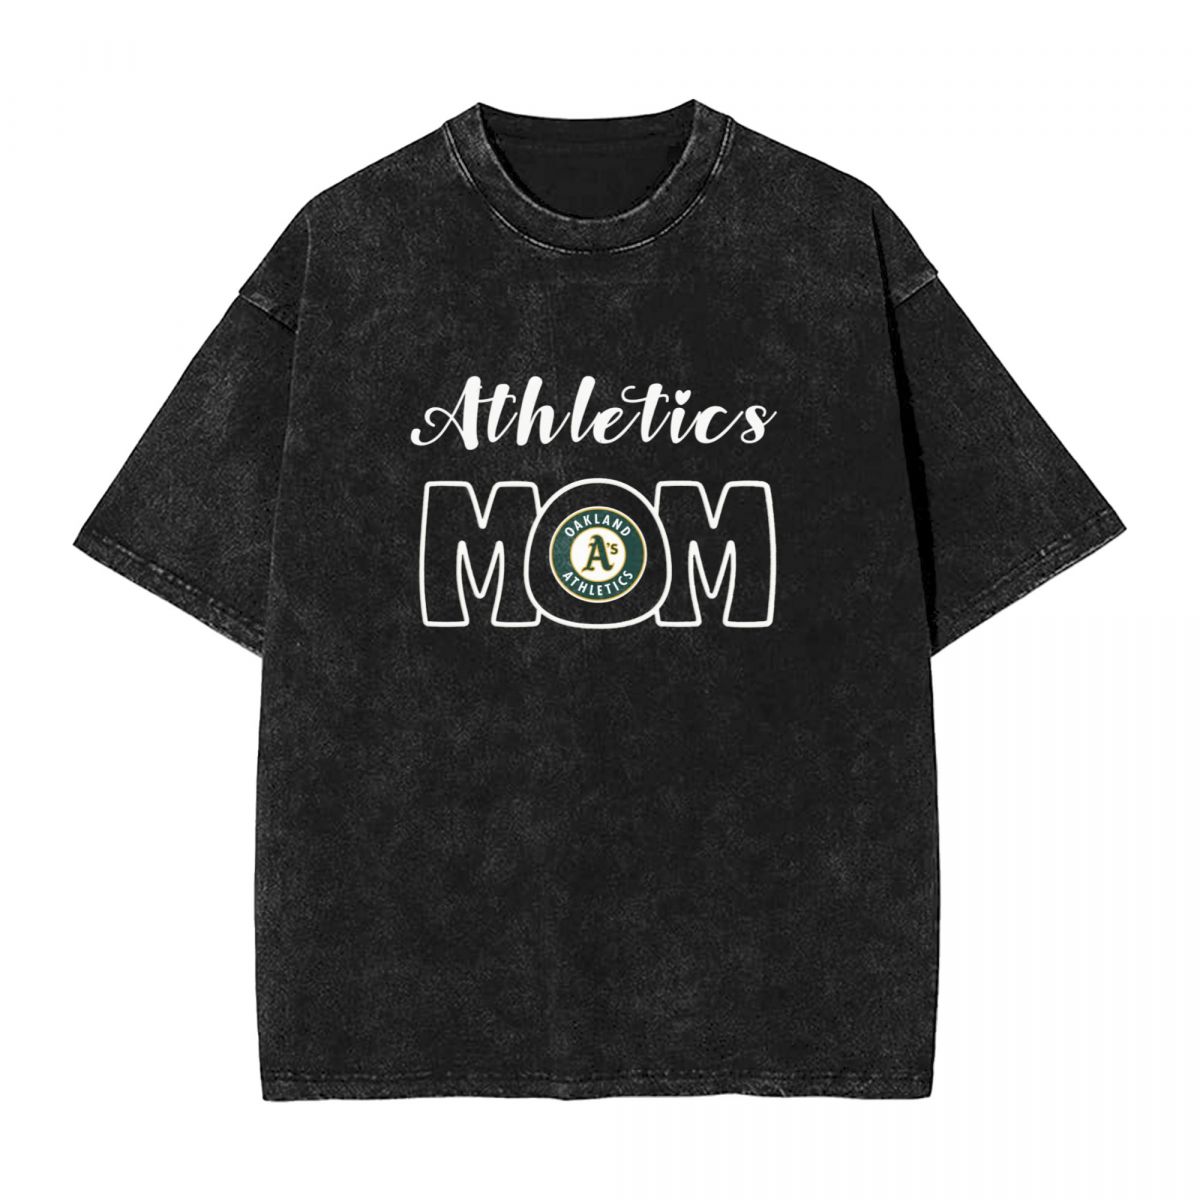 Oakland Athletics Mom Men's Oversized Streetwear Tee Shirts